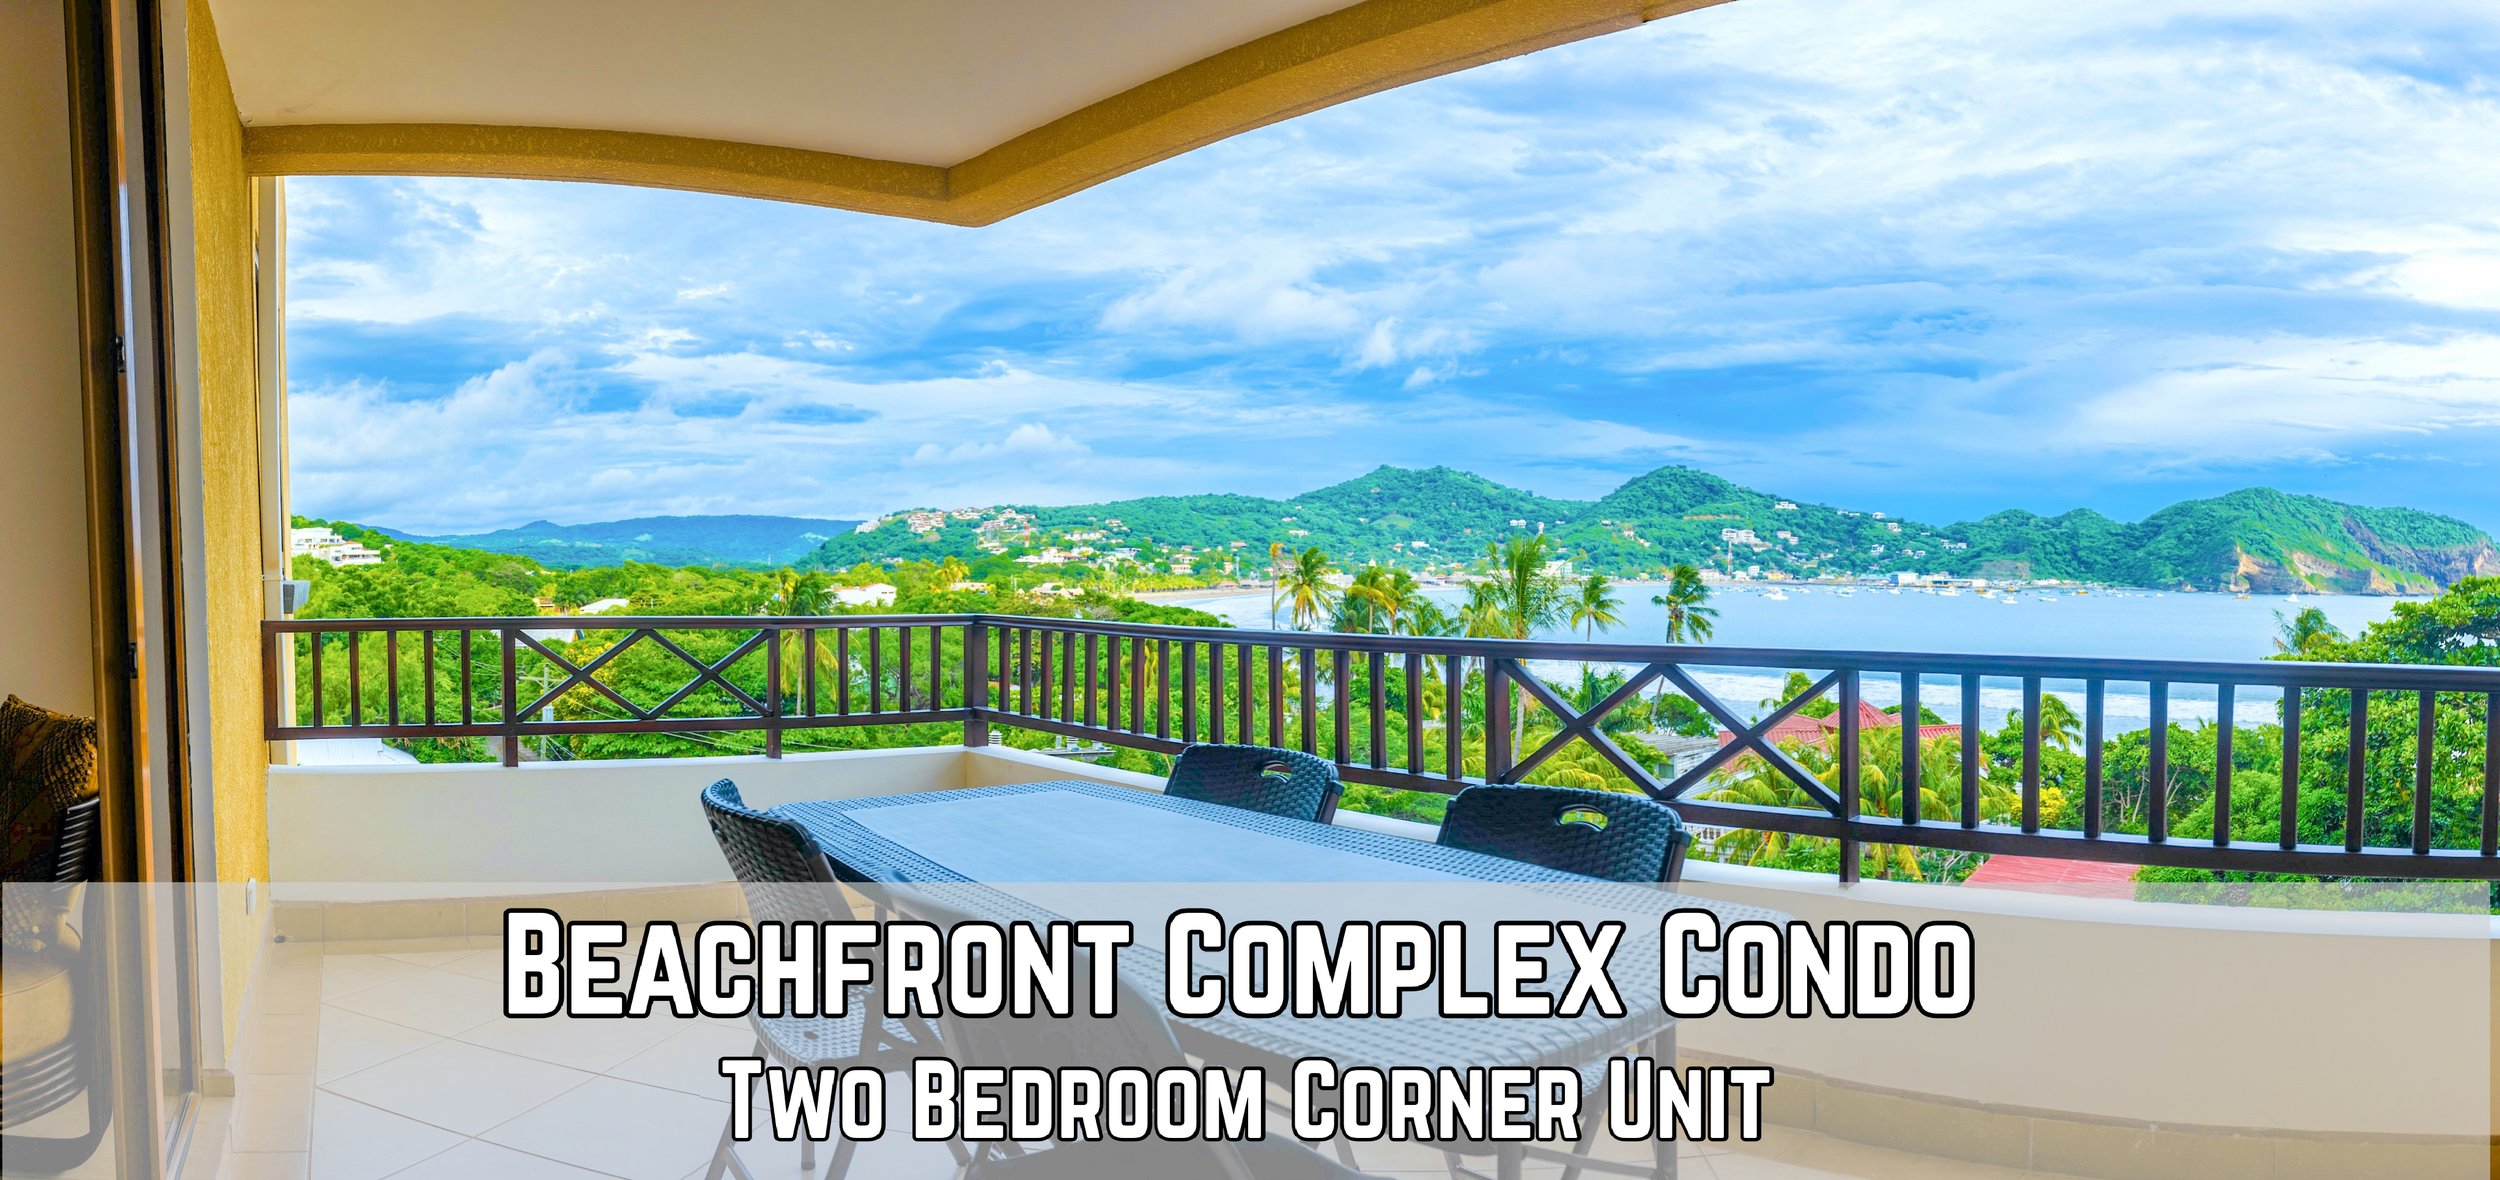 Beachfront San Juan Juan Del Sur Nicaragua Two Bedroom Condo For Sale7.jpg